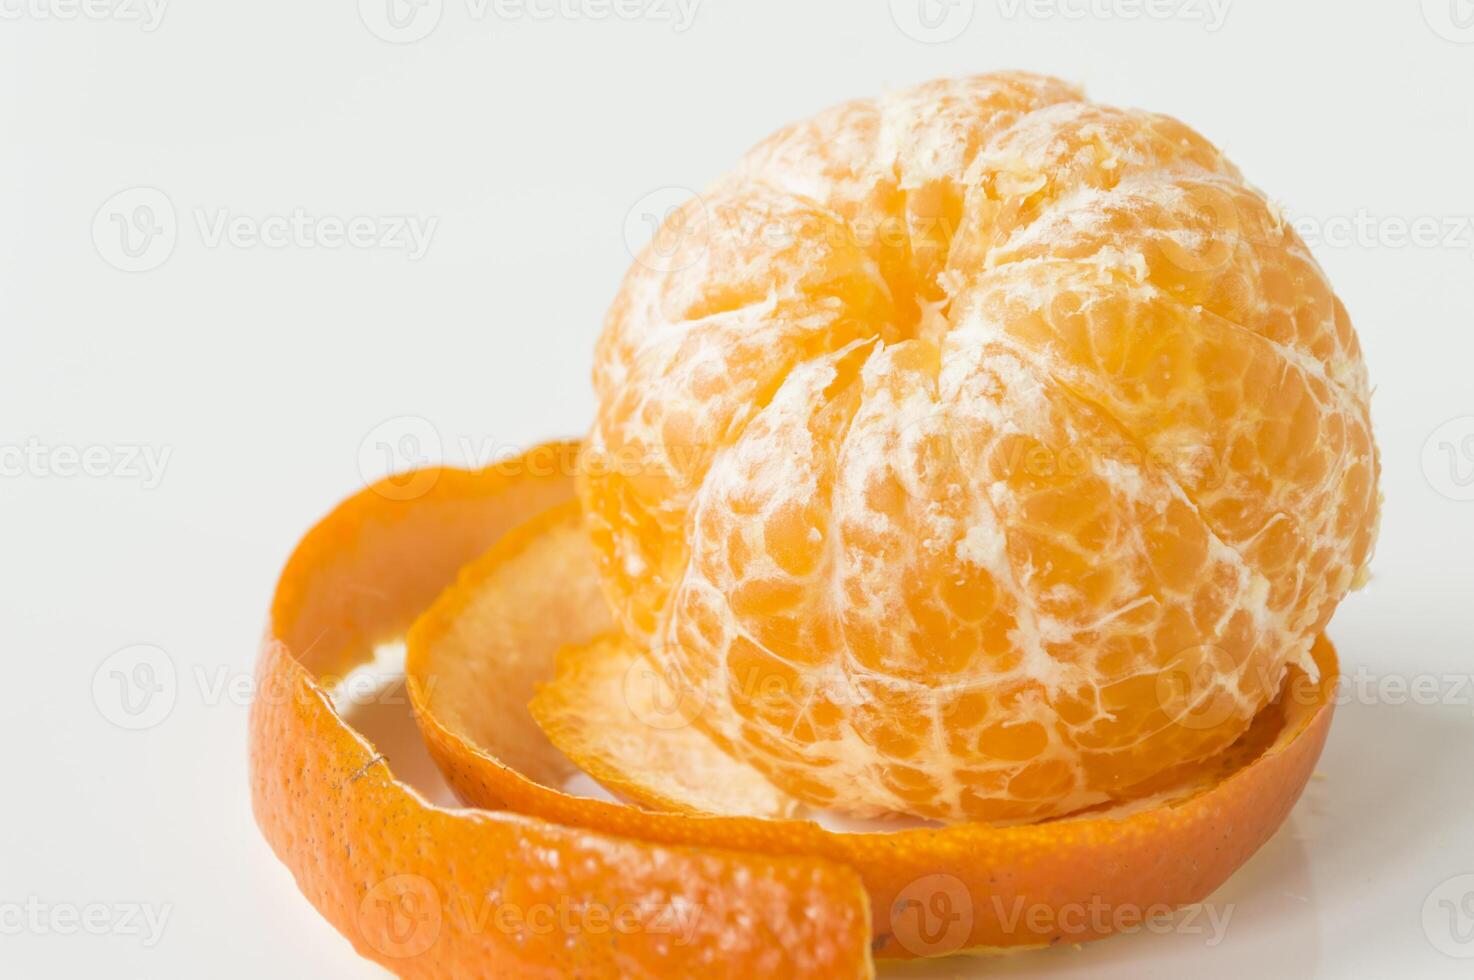 a peeled orange on a white surface photo